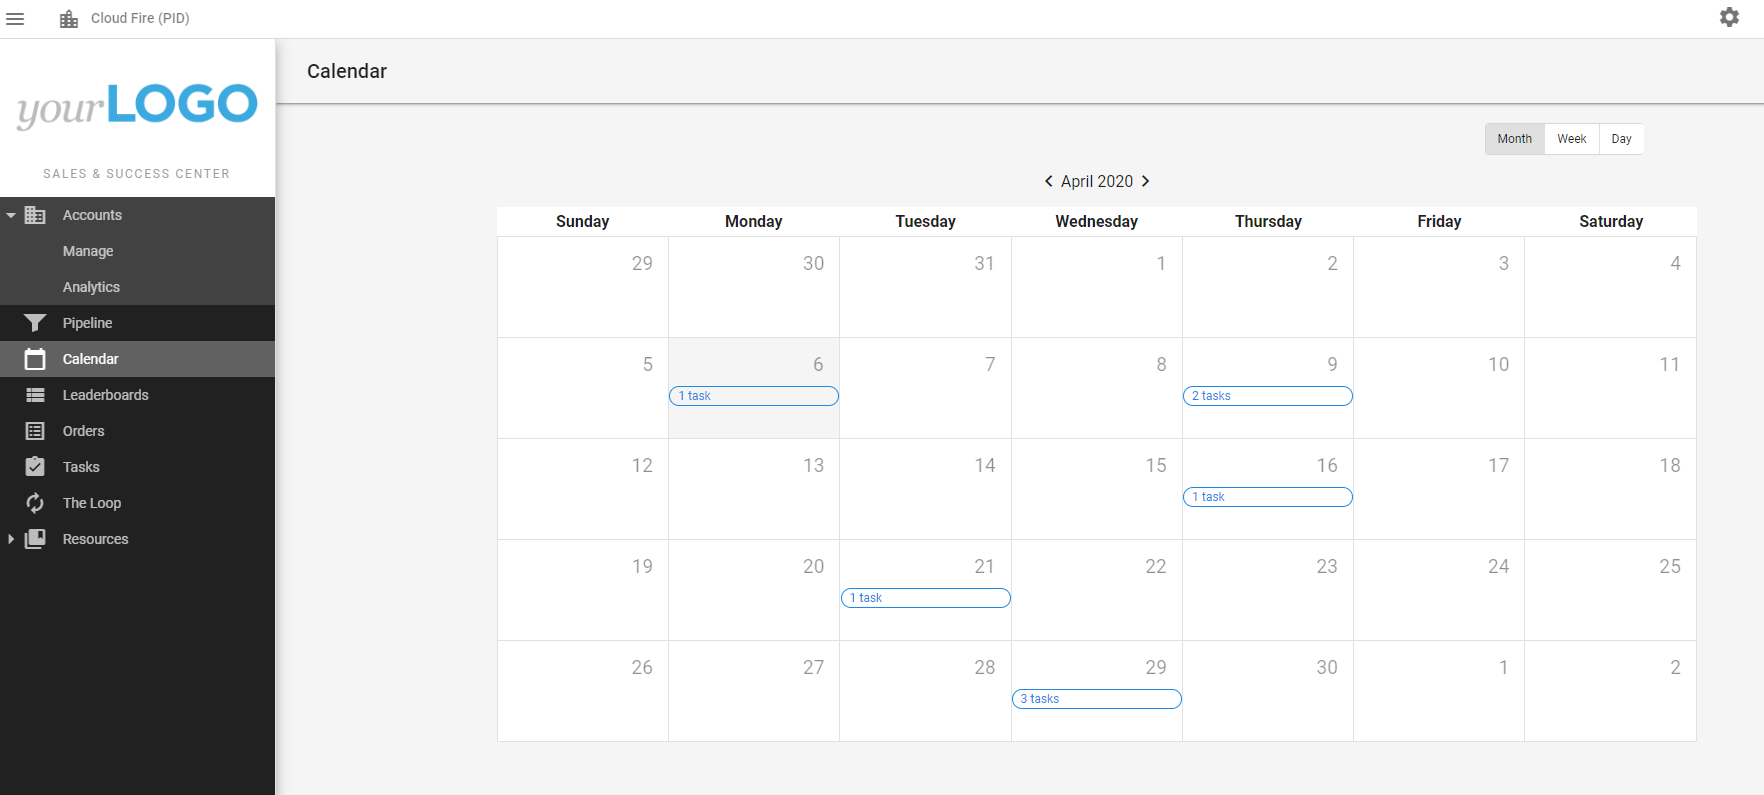 Task_calendar1.png